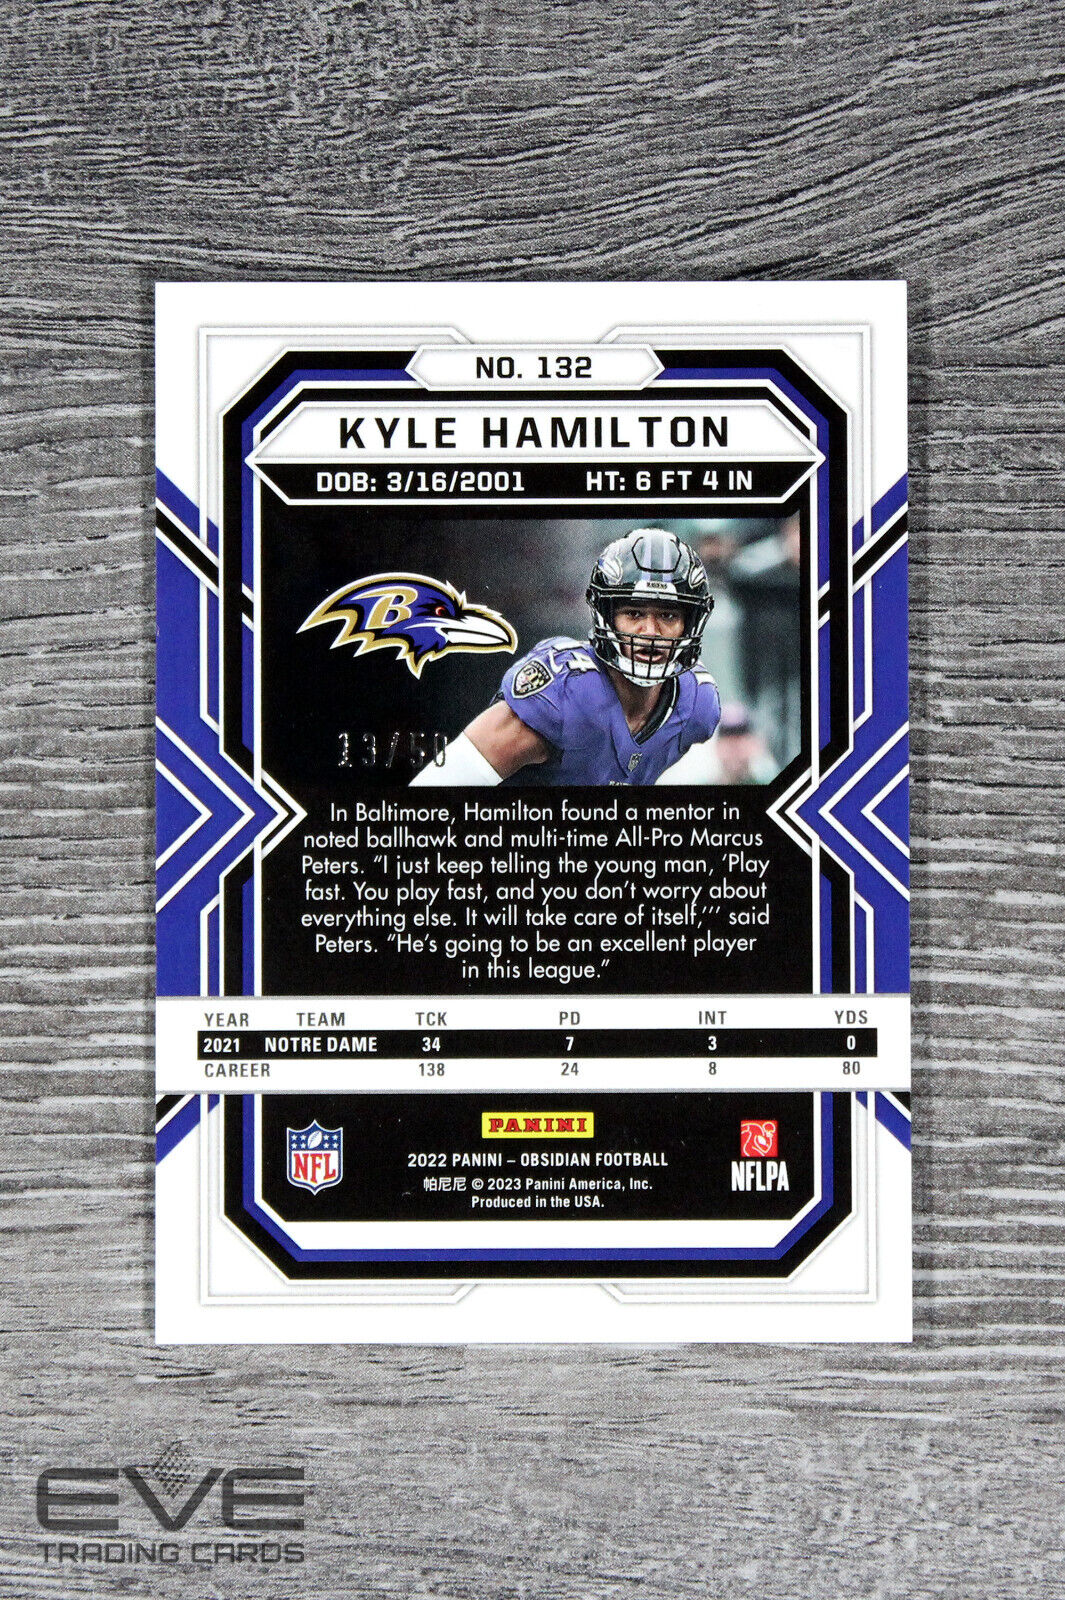 2022 Panini Obsidian NFL Card #132 Kyle Hamilton Green Etch Rookie /50 NM/M